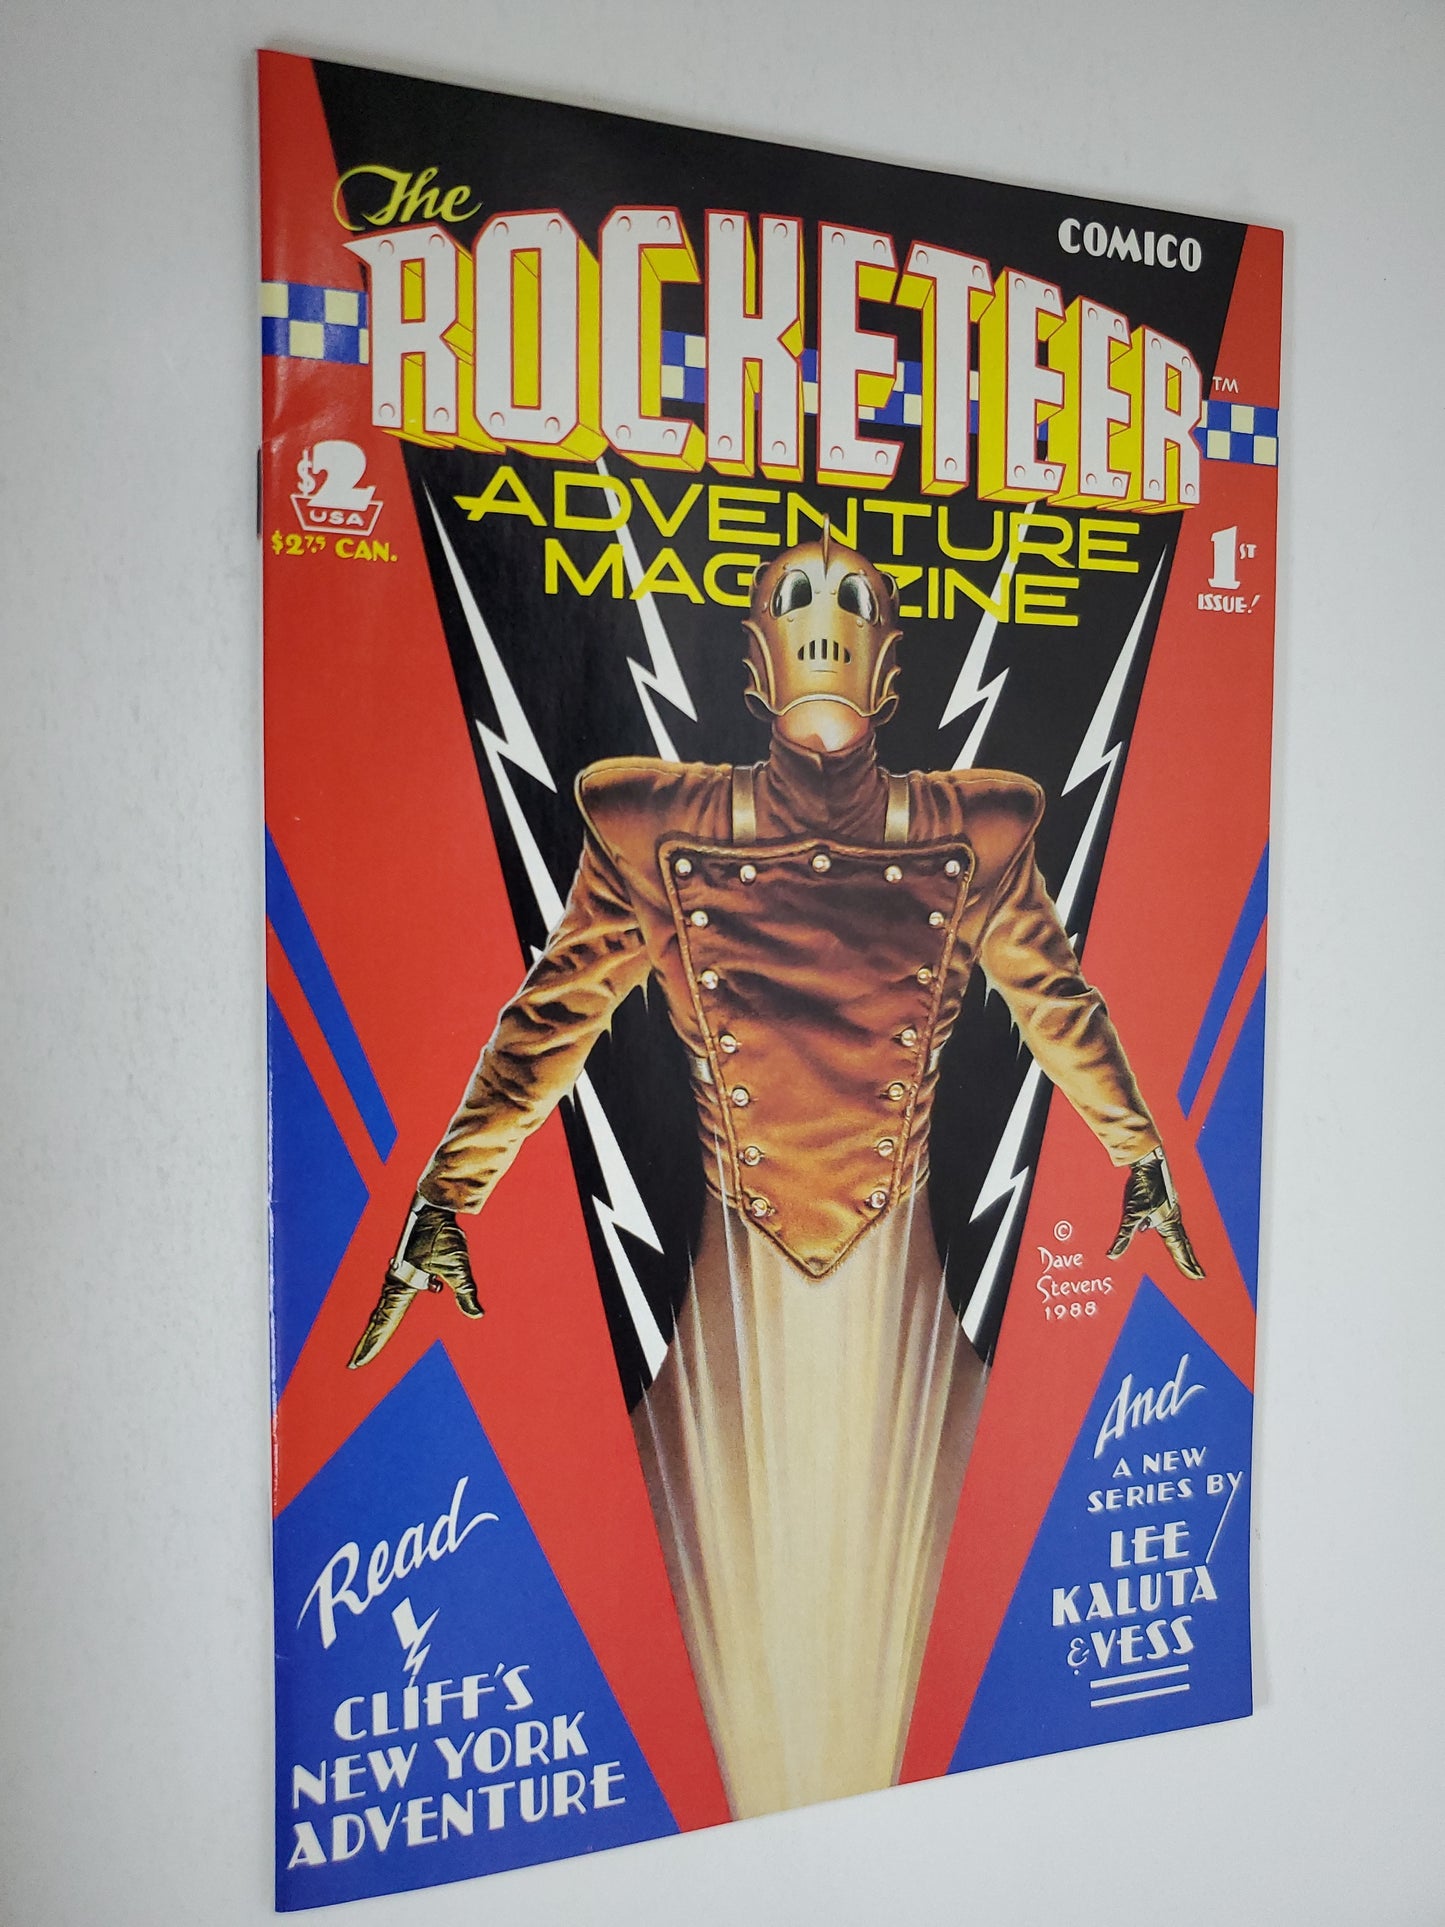 Comico The Rocketeer Adventure Magazine #1